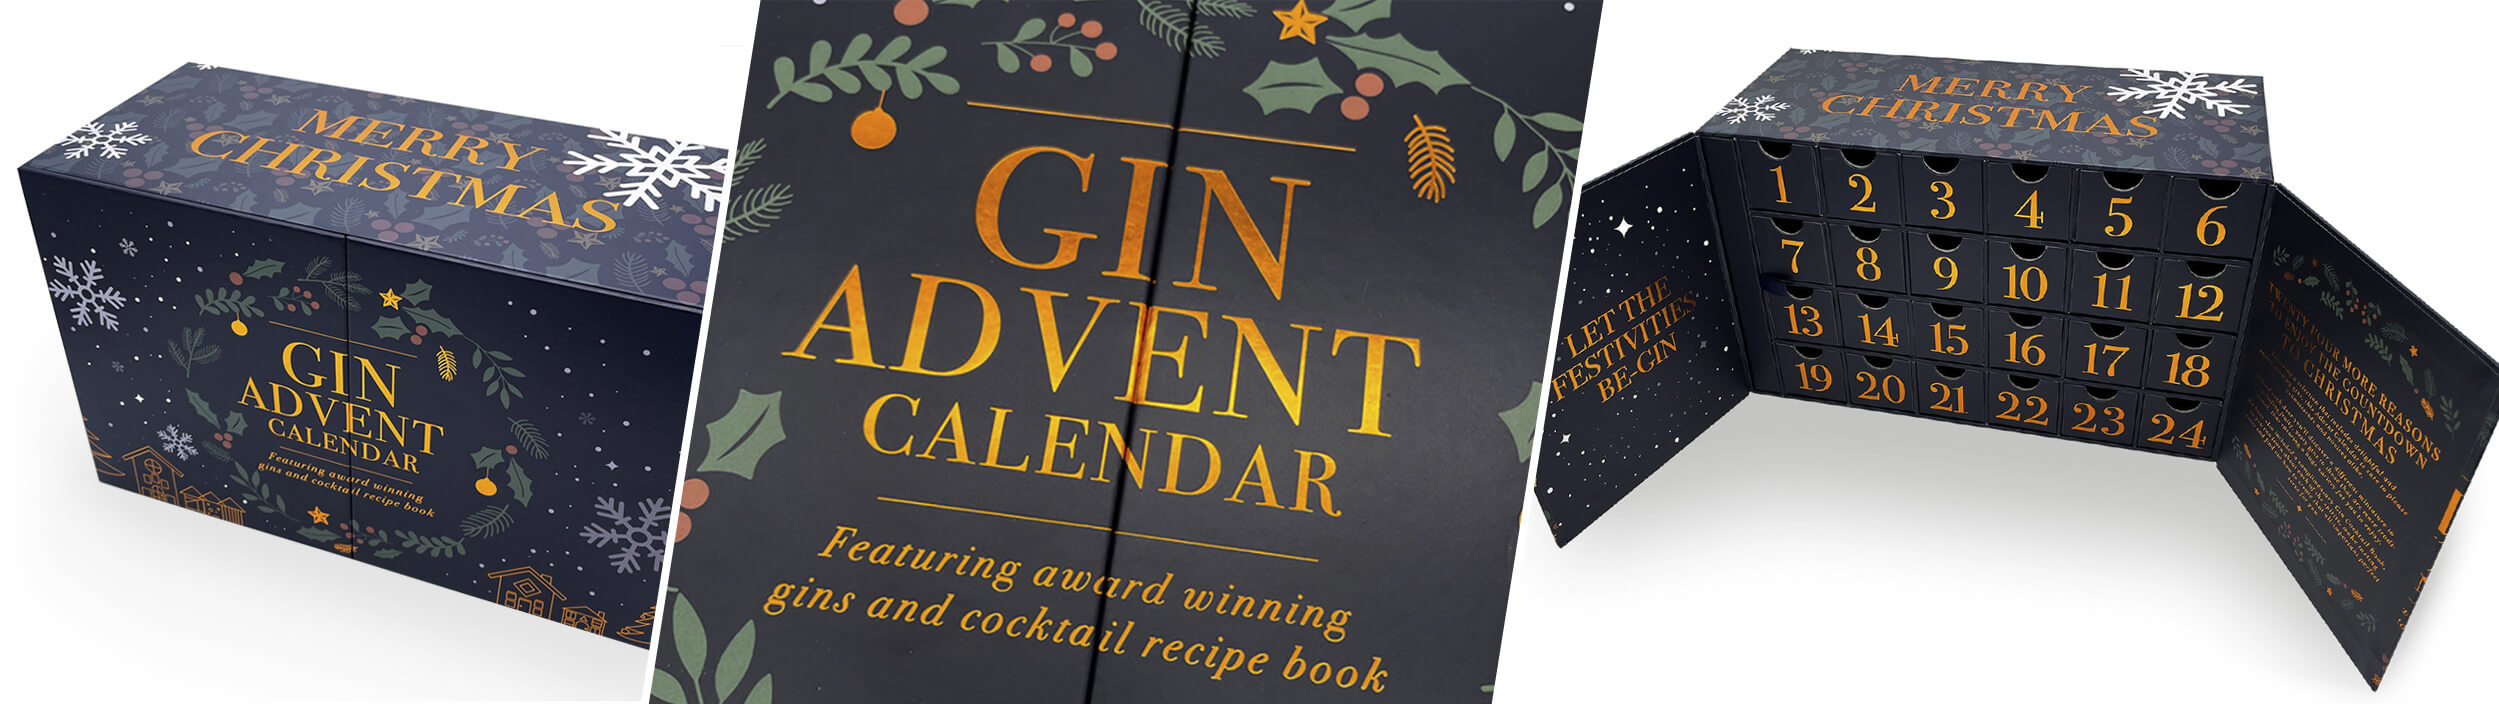 Gin advent calendar